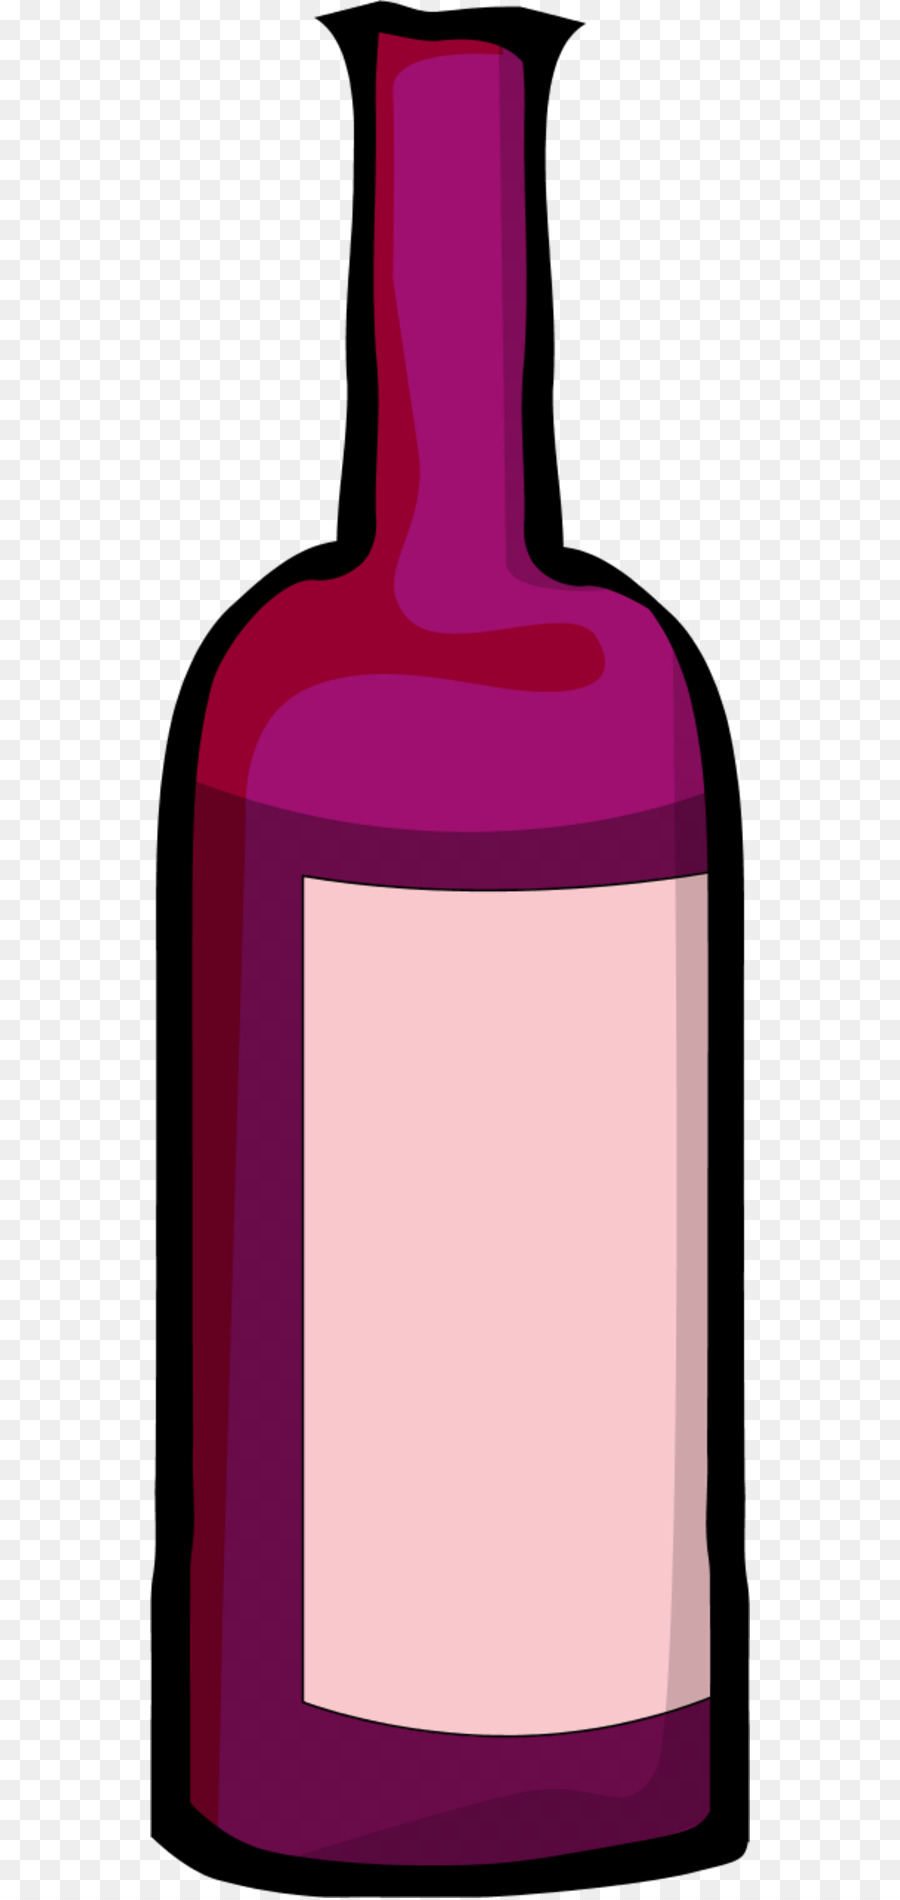 bottle clipart wine bottle